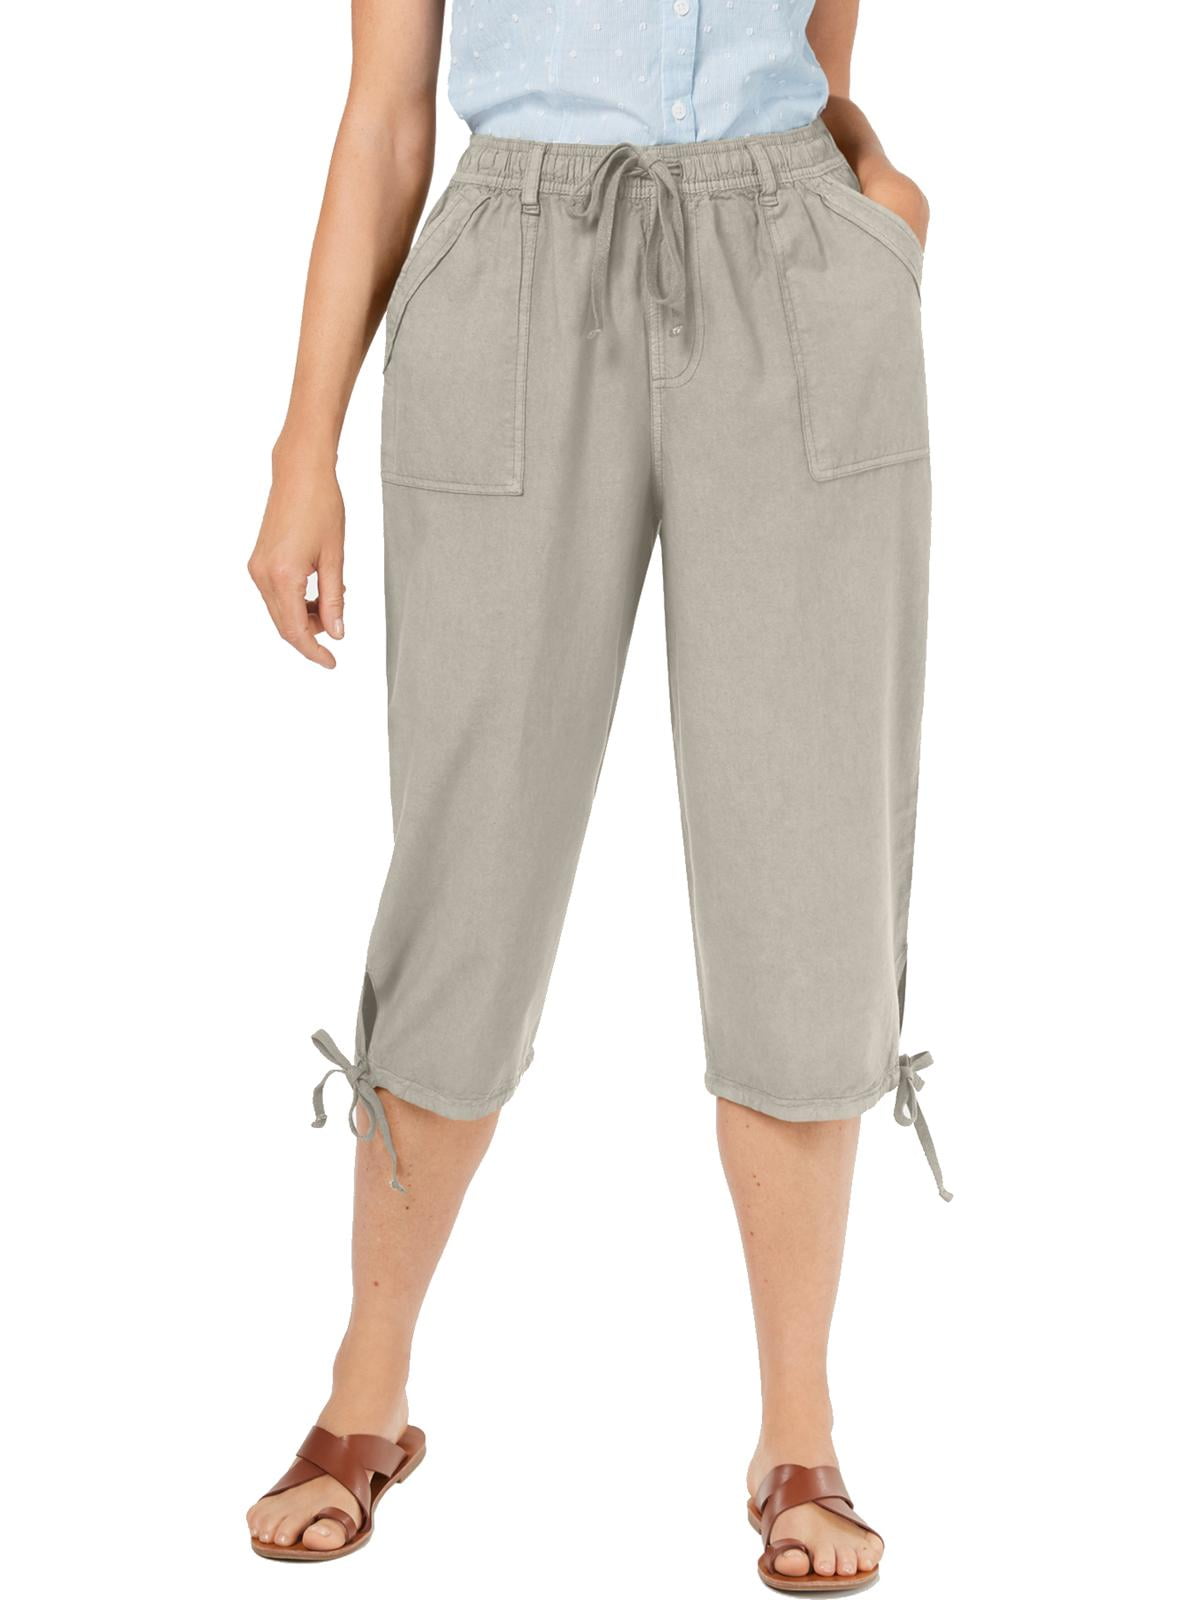 Karen Scott Womens Cotton Knit Capri Pants Beige M - Walmart.com